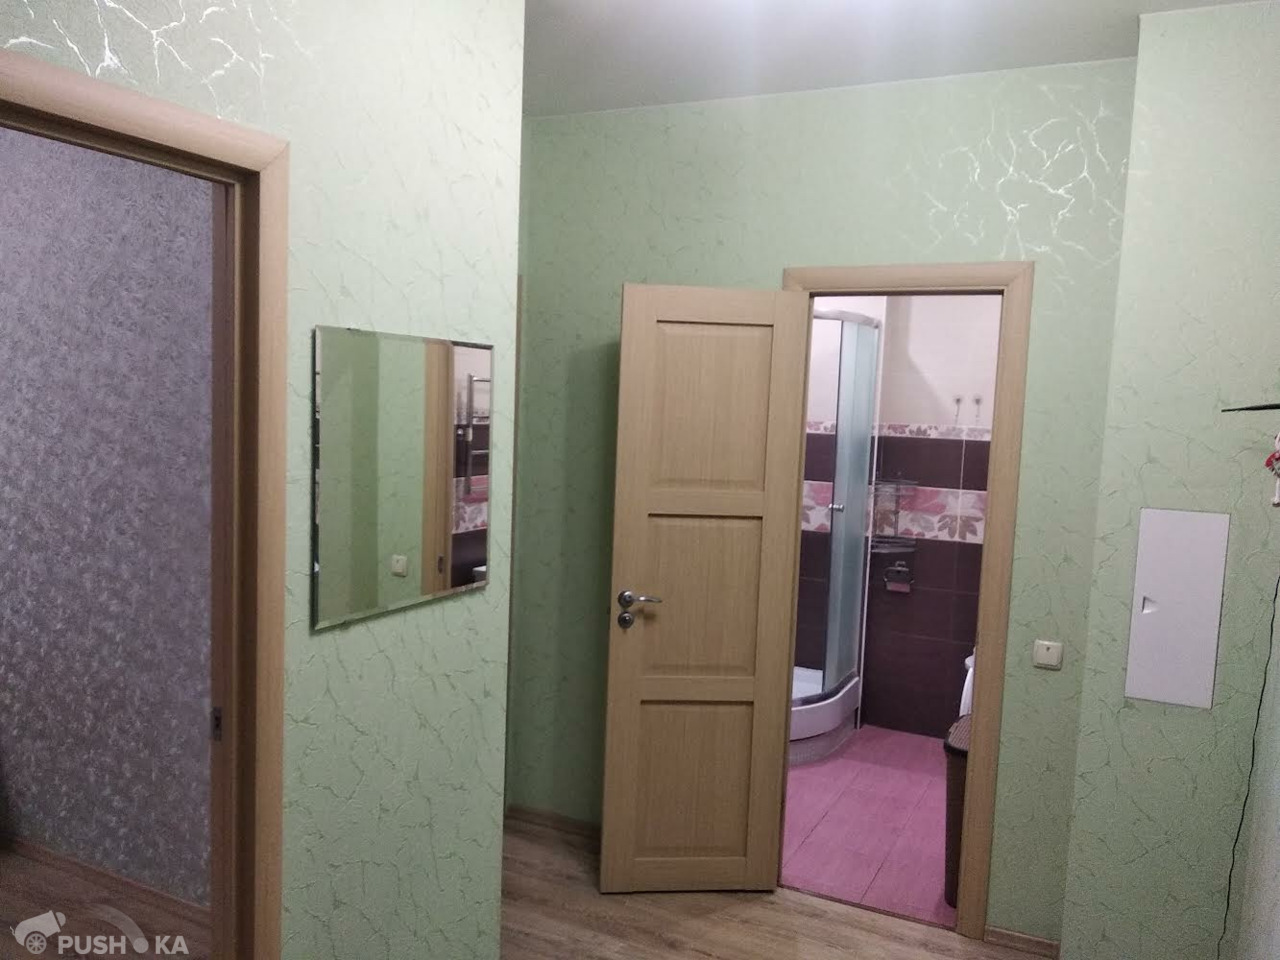 Продаётся 1-комнатная квартира 42.4 кв.м. этаж 11/12 за 5 999 000 руб 